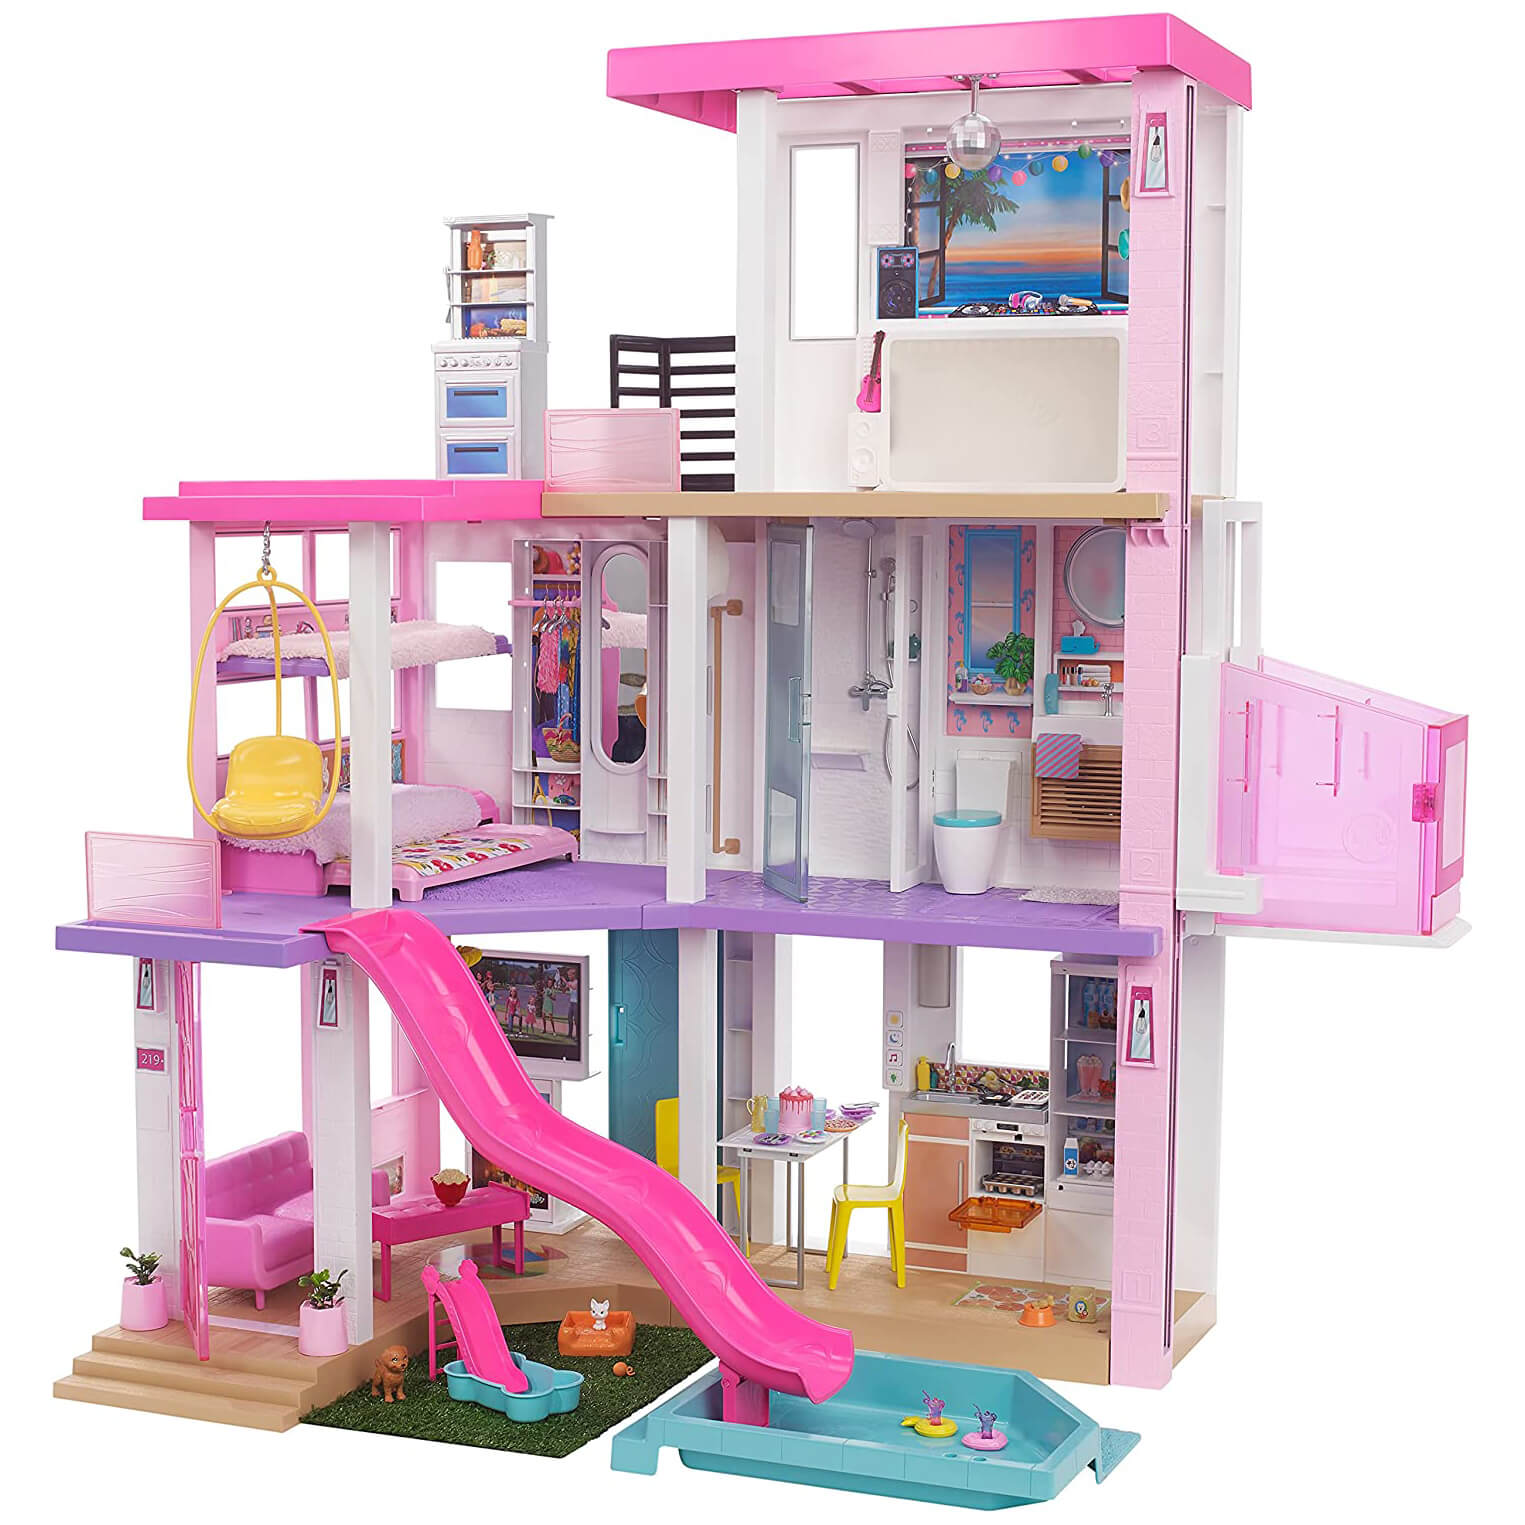 Barbie DreamHouse Dollhouse with Pool, Slide, Elevator, Lights & Sounds